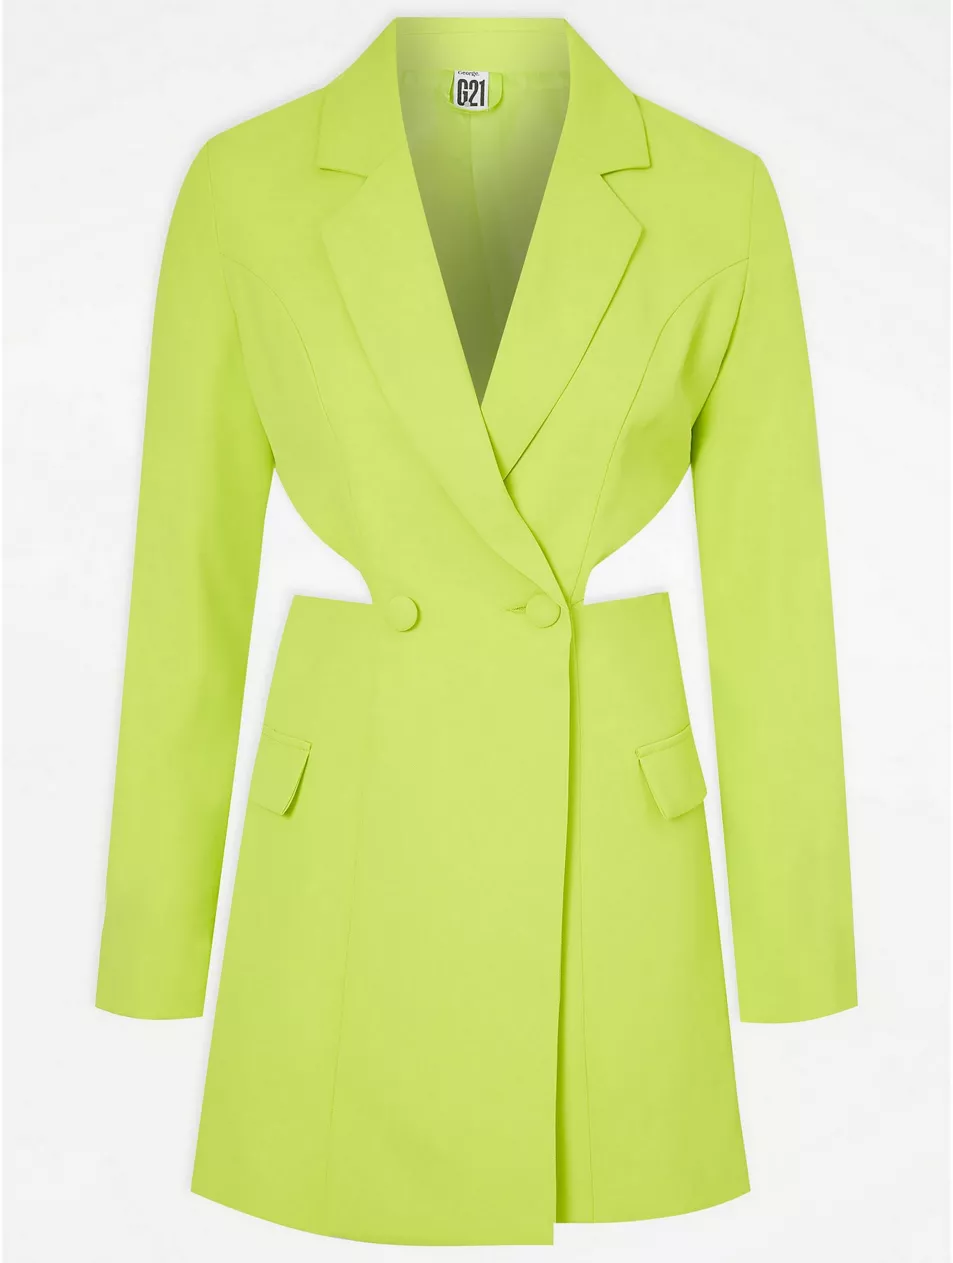 George G21 Lime Green Cut Out Blazer Dress